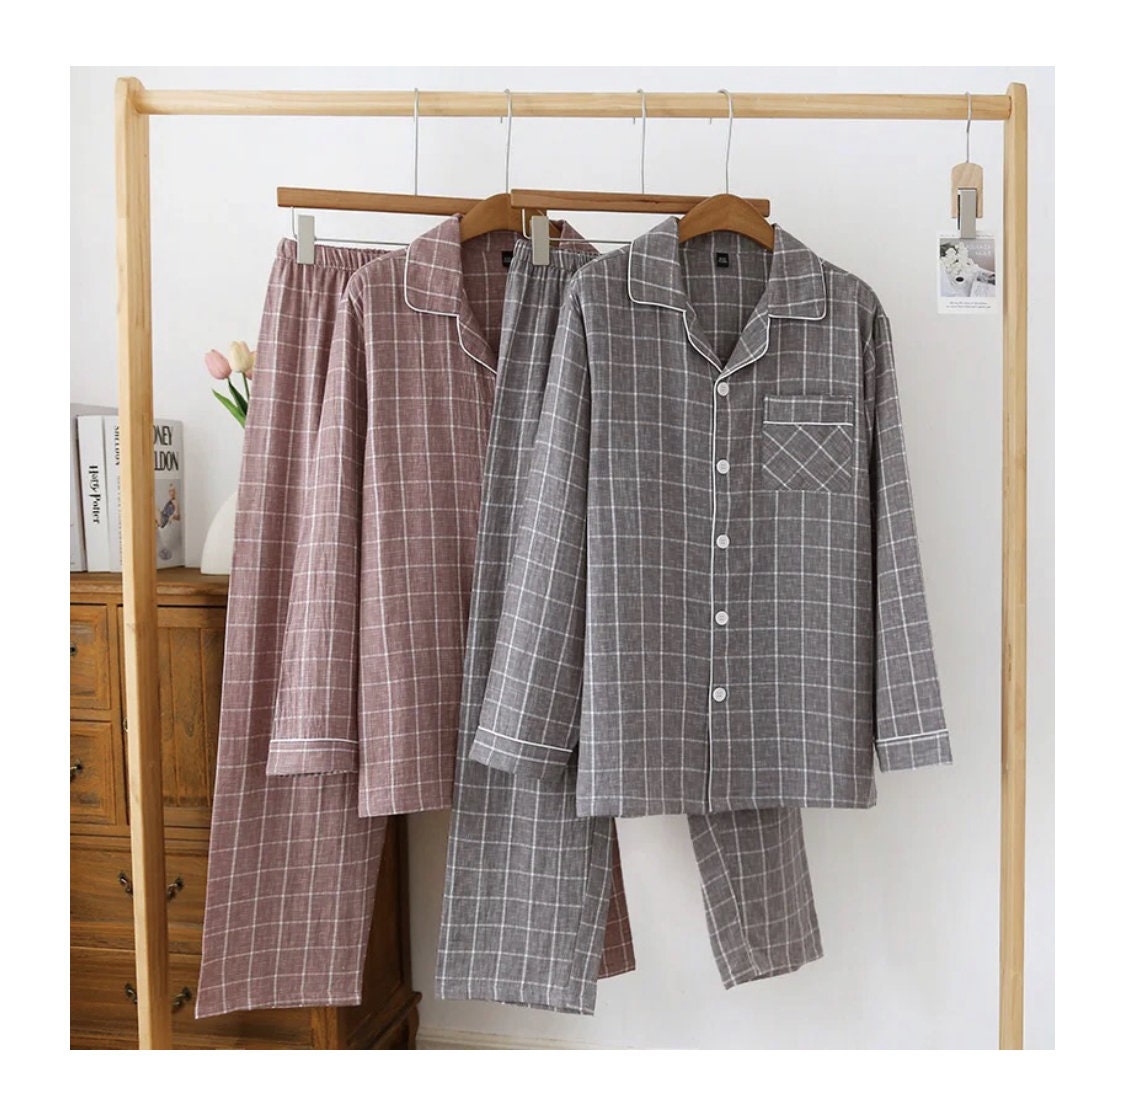 Japanese sleeping clothes